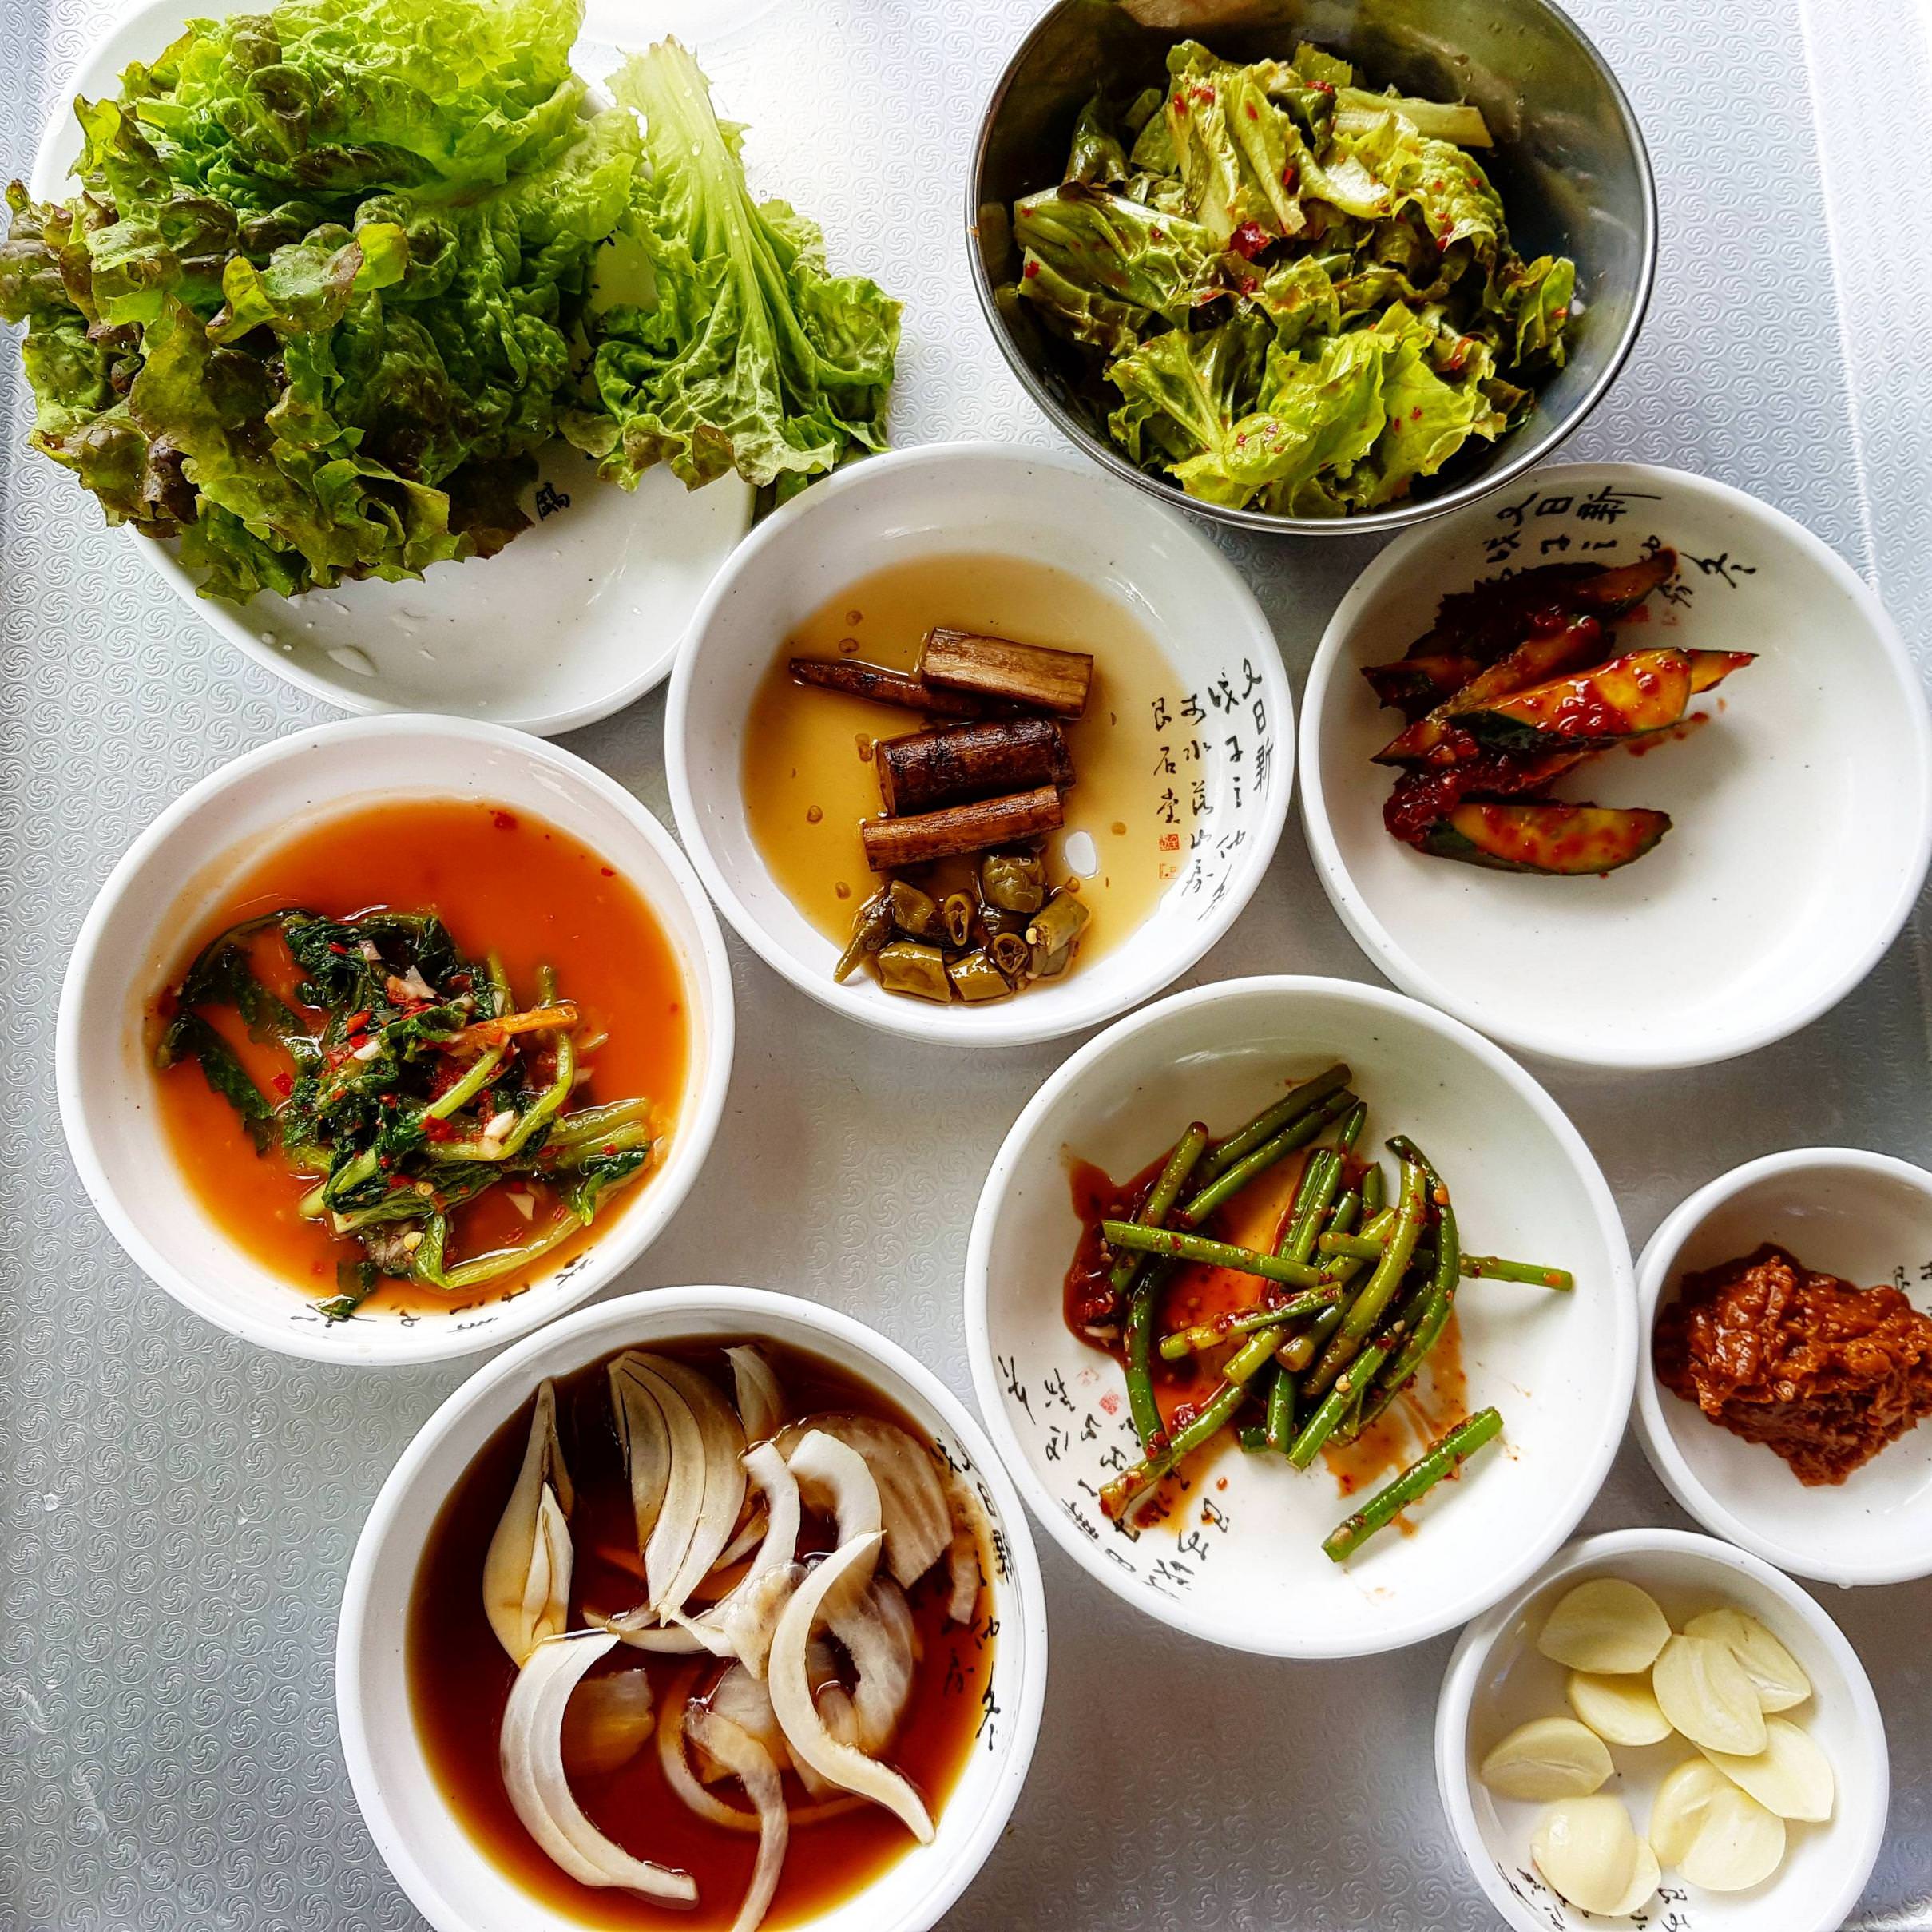 Korean Banchan Side Dishes